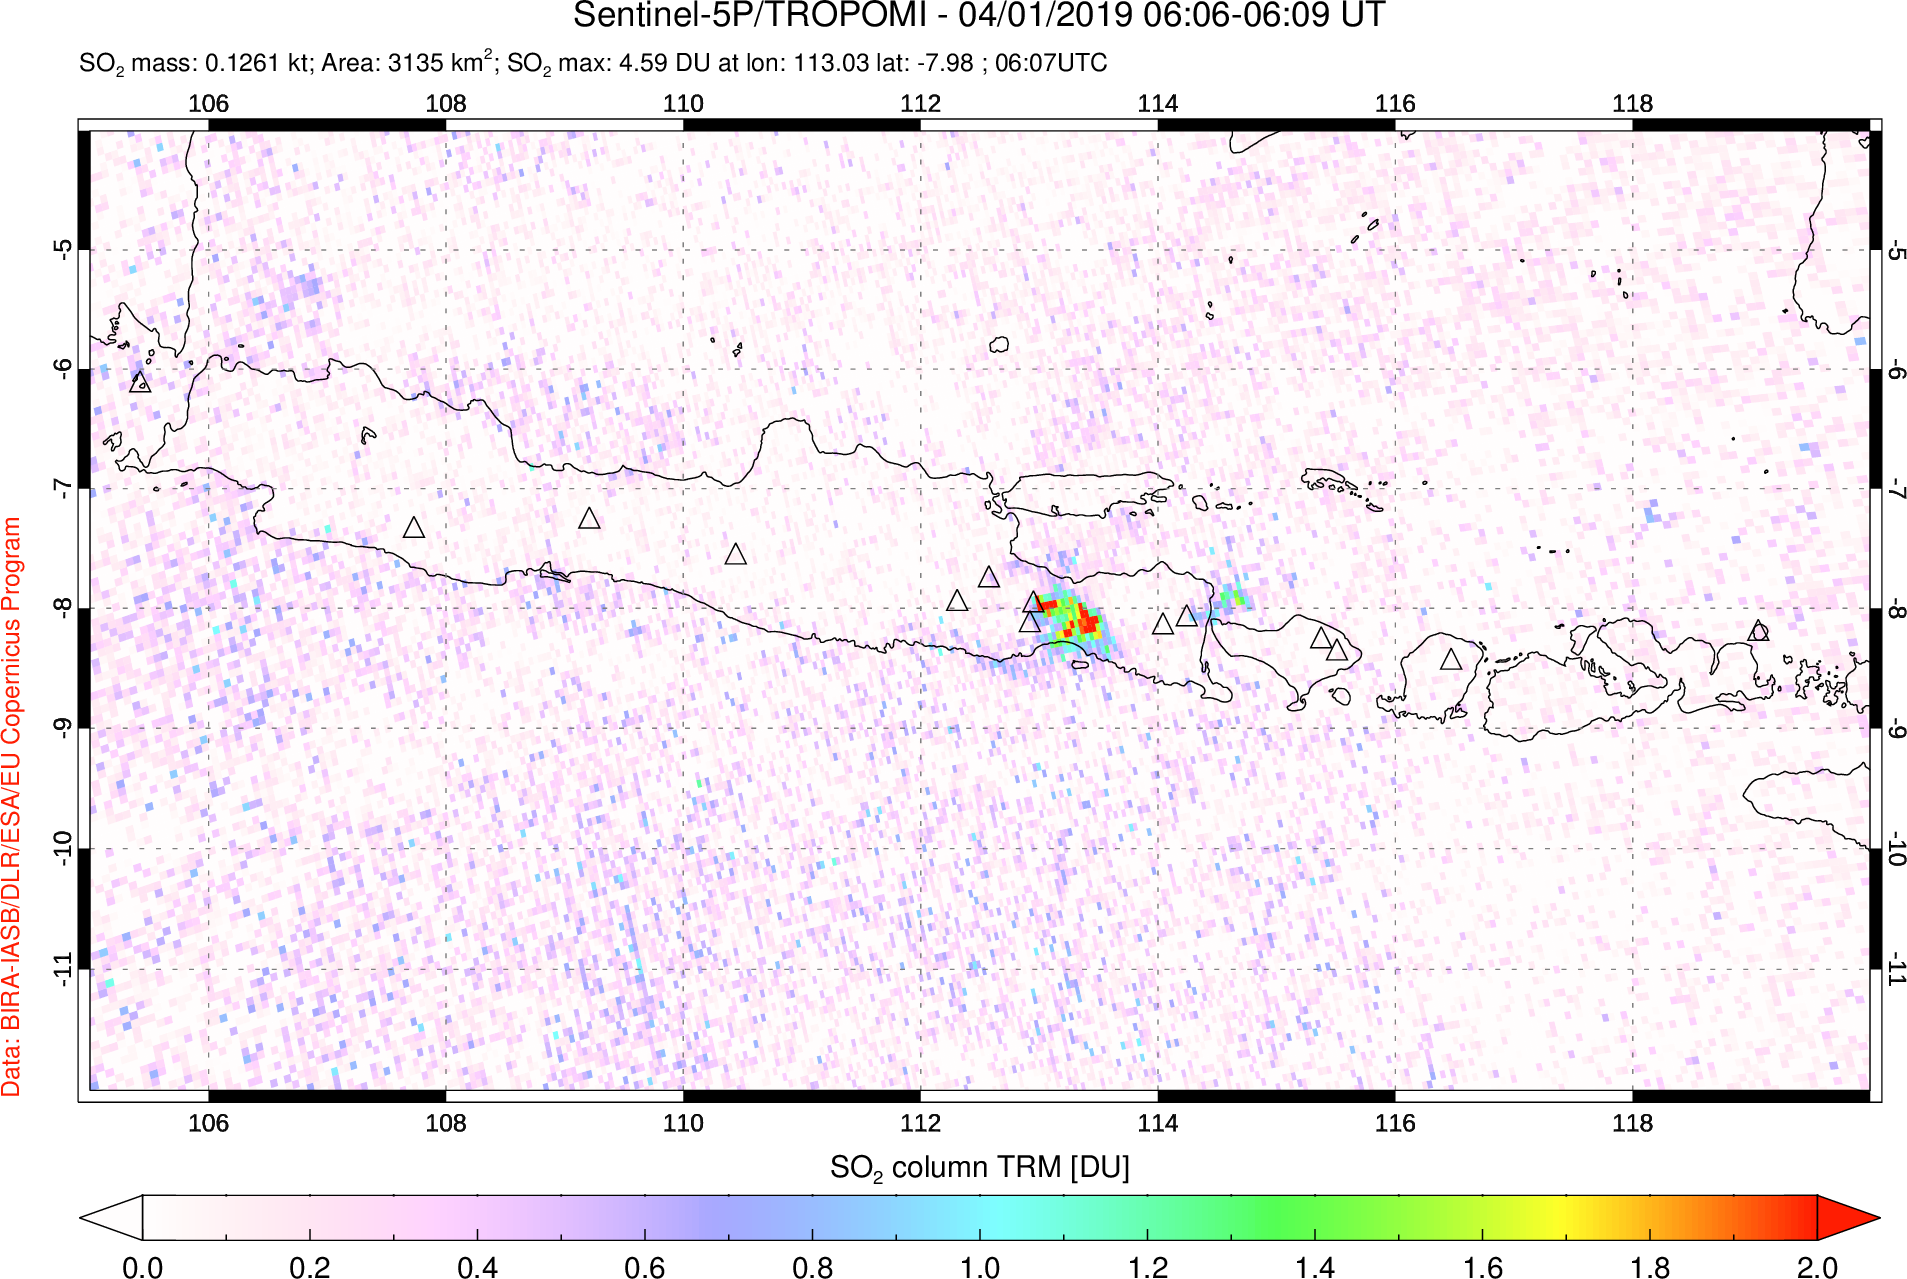 A sulfur dioxide image over Java, Indonesia on Apr 01, 2019.